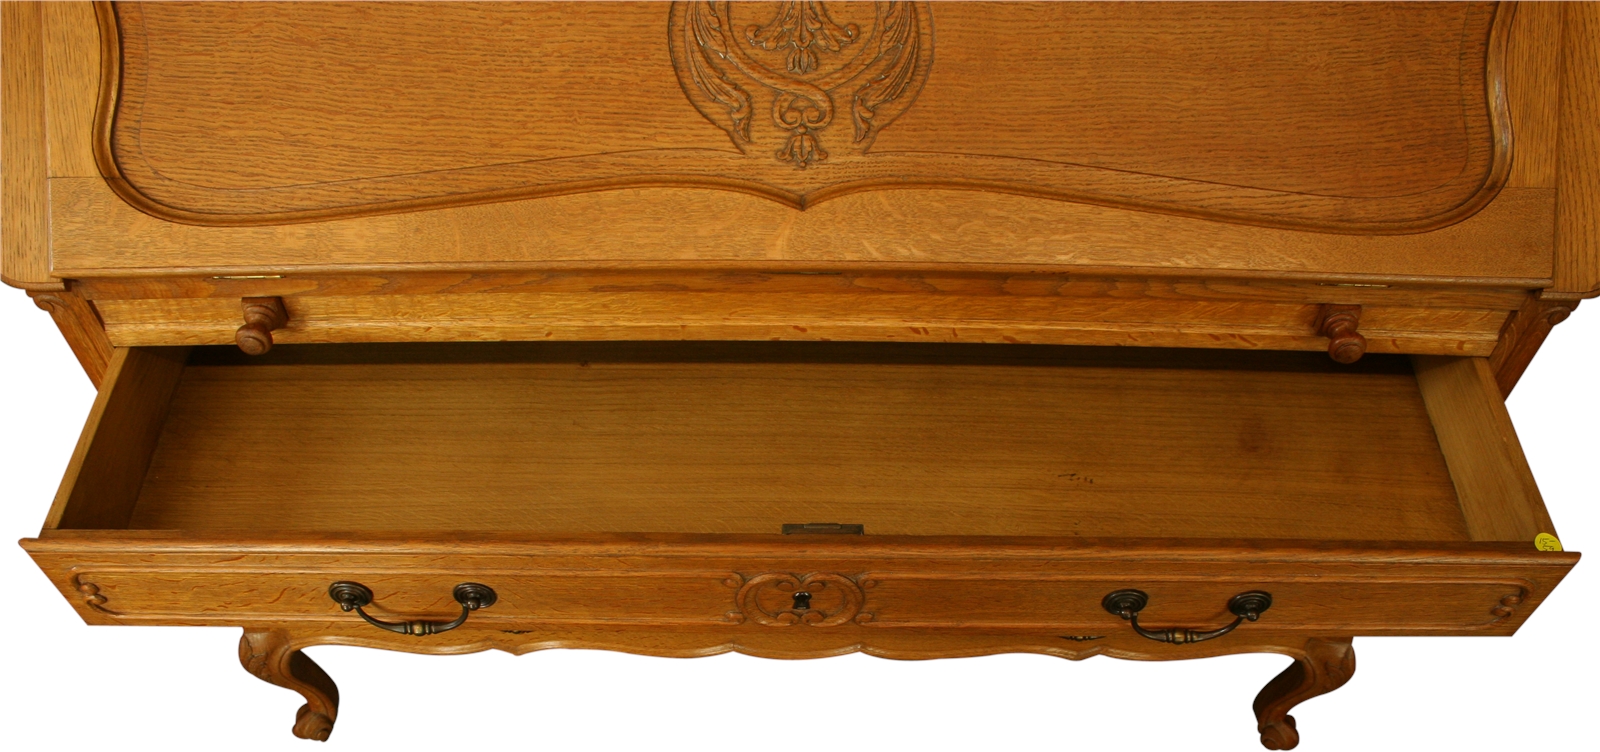 Vintage French Secretary Desk, Quartersawn Golden Oak, Carved, Louis XV Style-Image 13